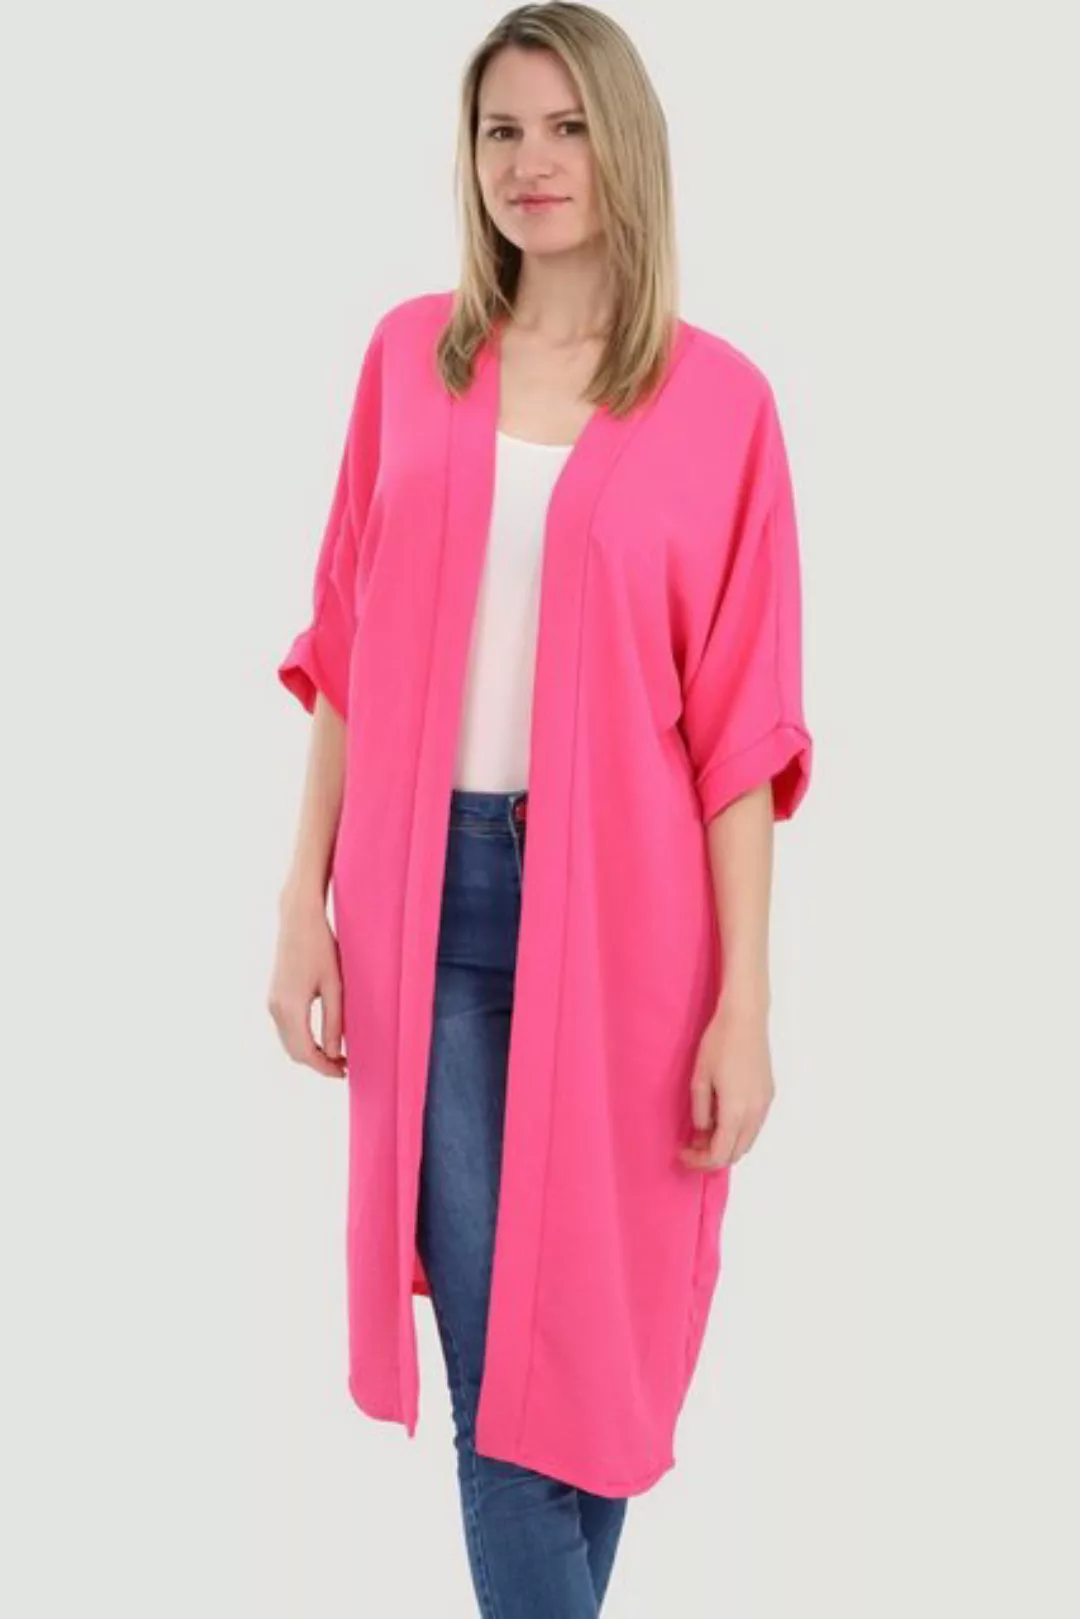 malito more than fashion Cardigan 2342 Kimono Sommer Strand Cover up mit ex günstig online kaufen